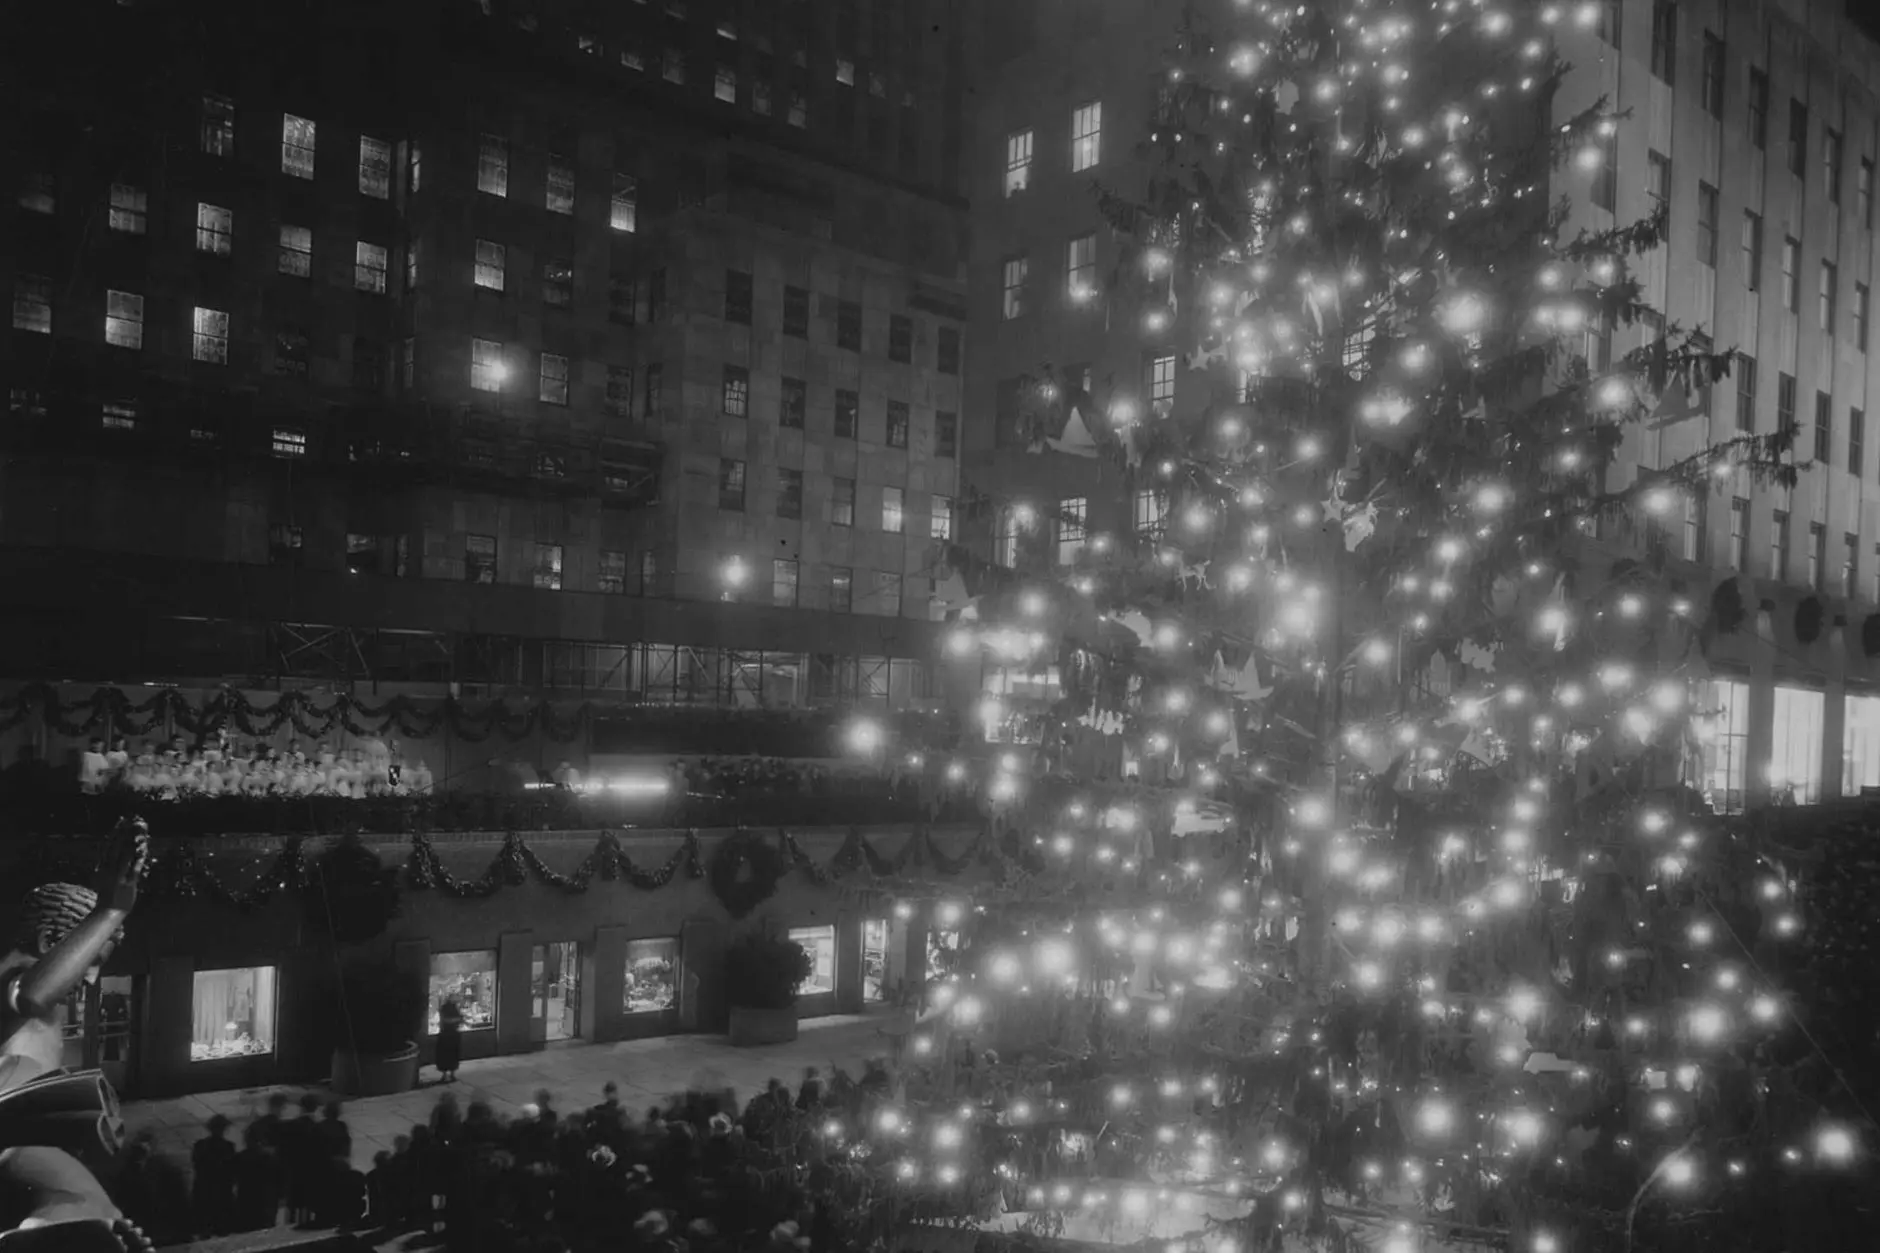 89TH ANNUAL ROCKEFELLER CHRISTMAS TREE LIGHTING, NYC — Average Socialite